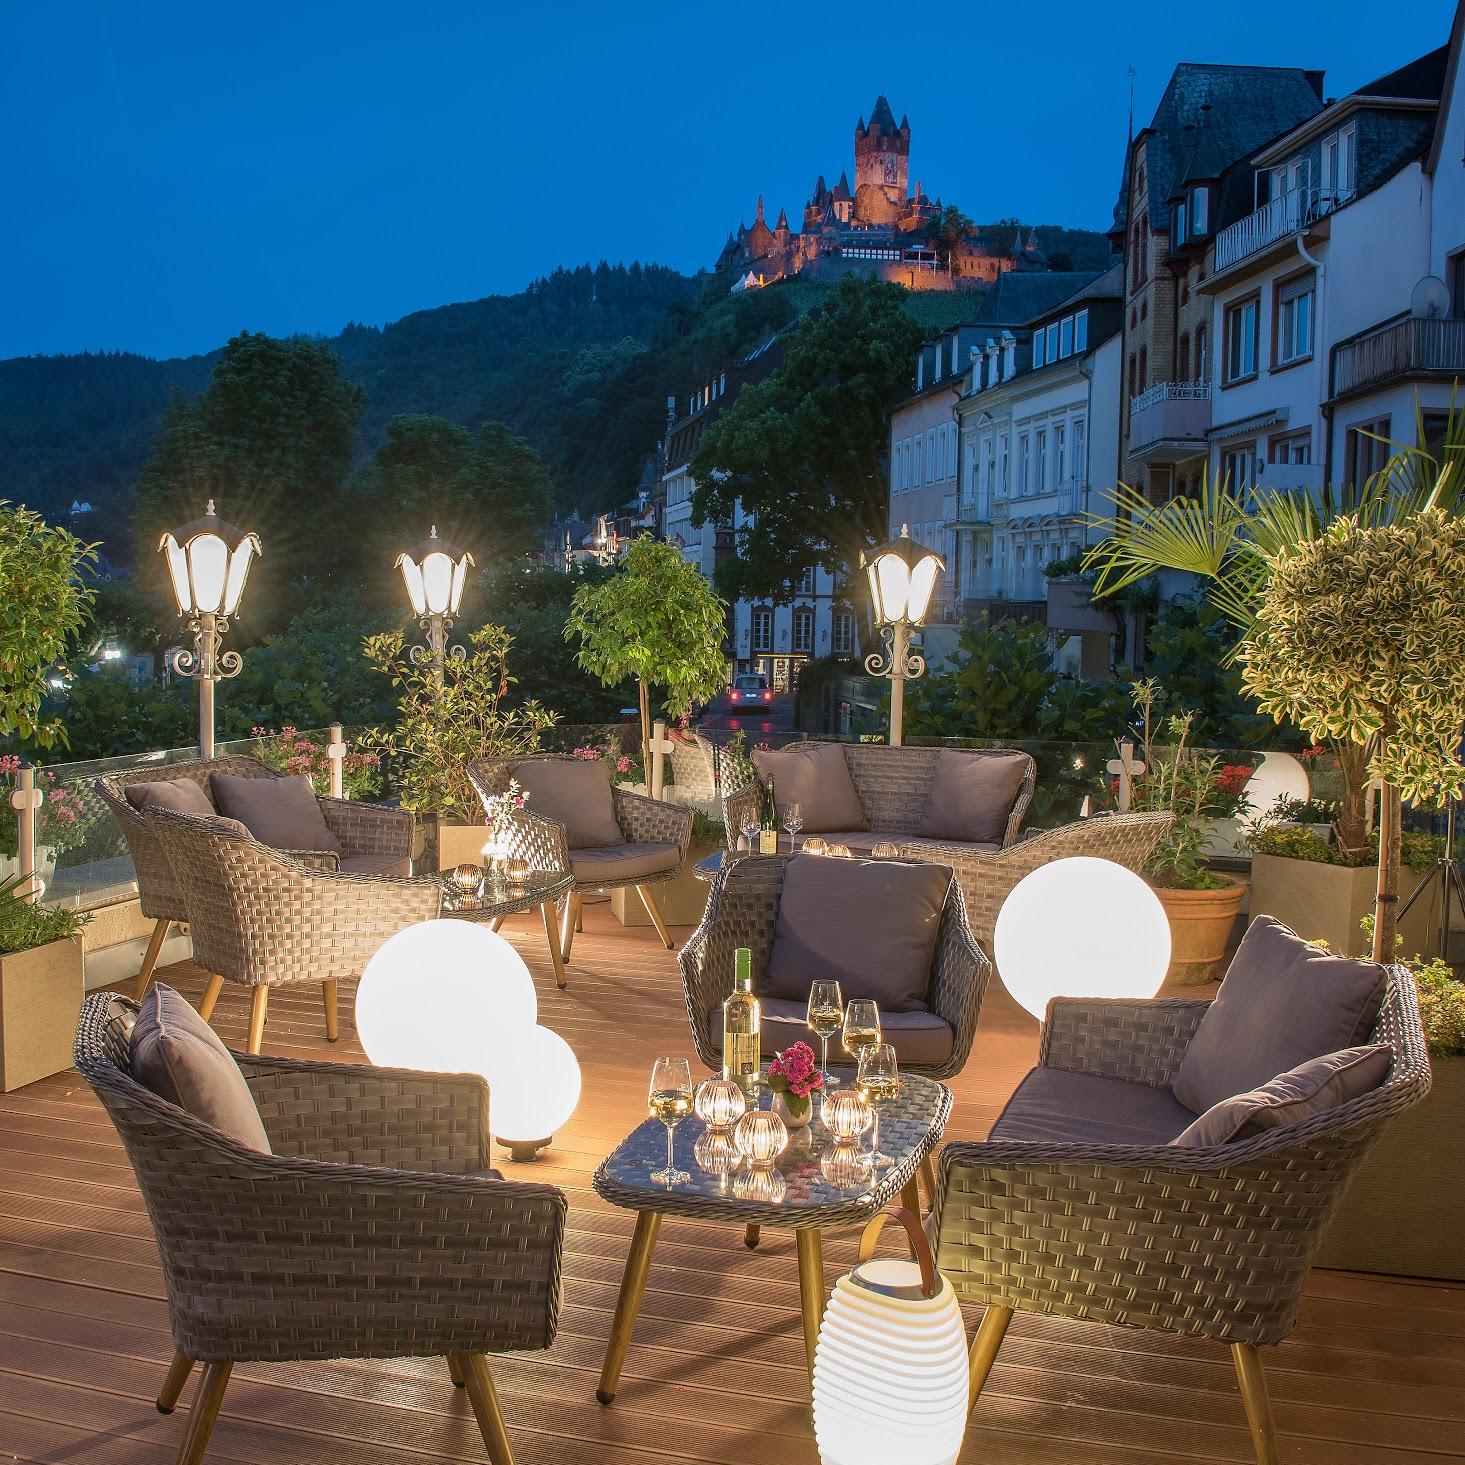 Restaurant "Hotel Germania -" in Cochem